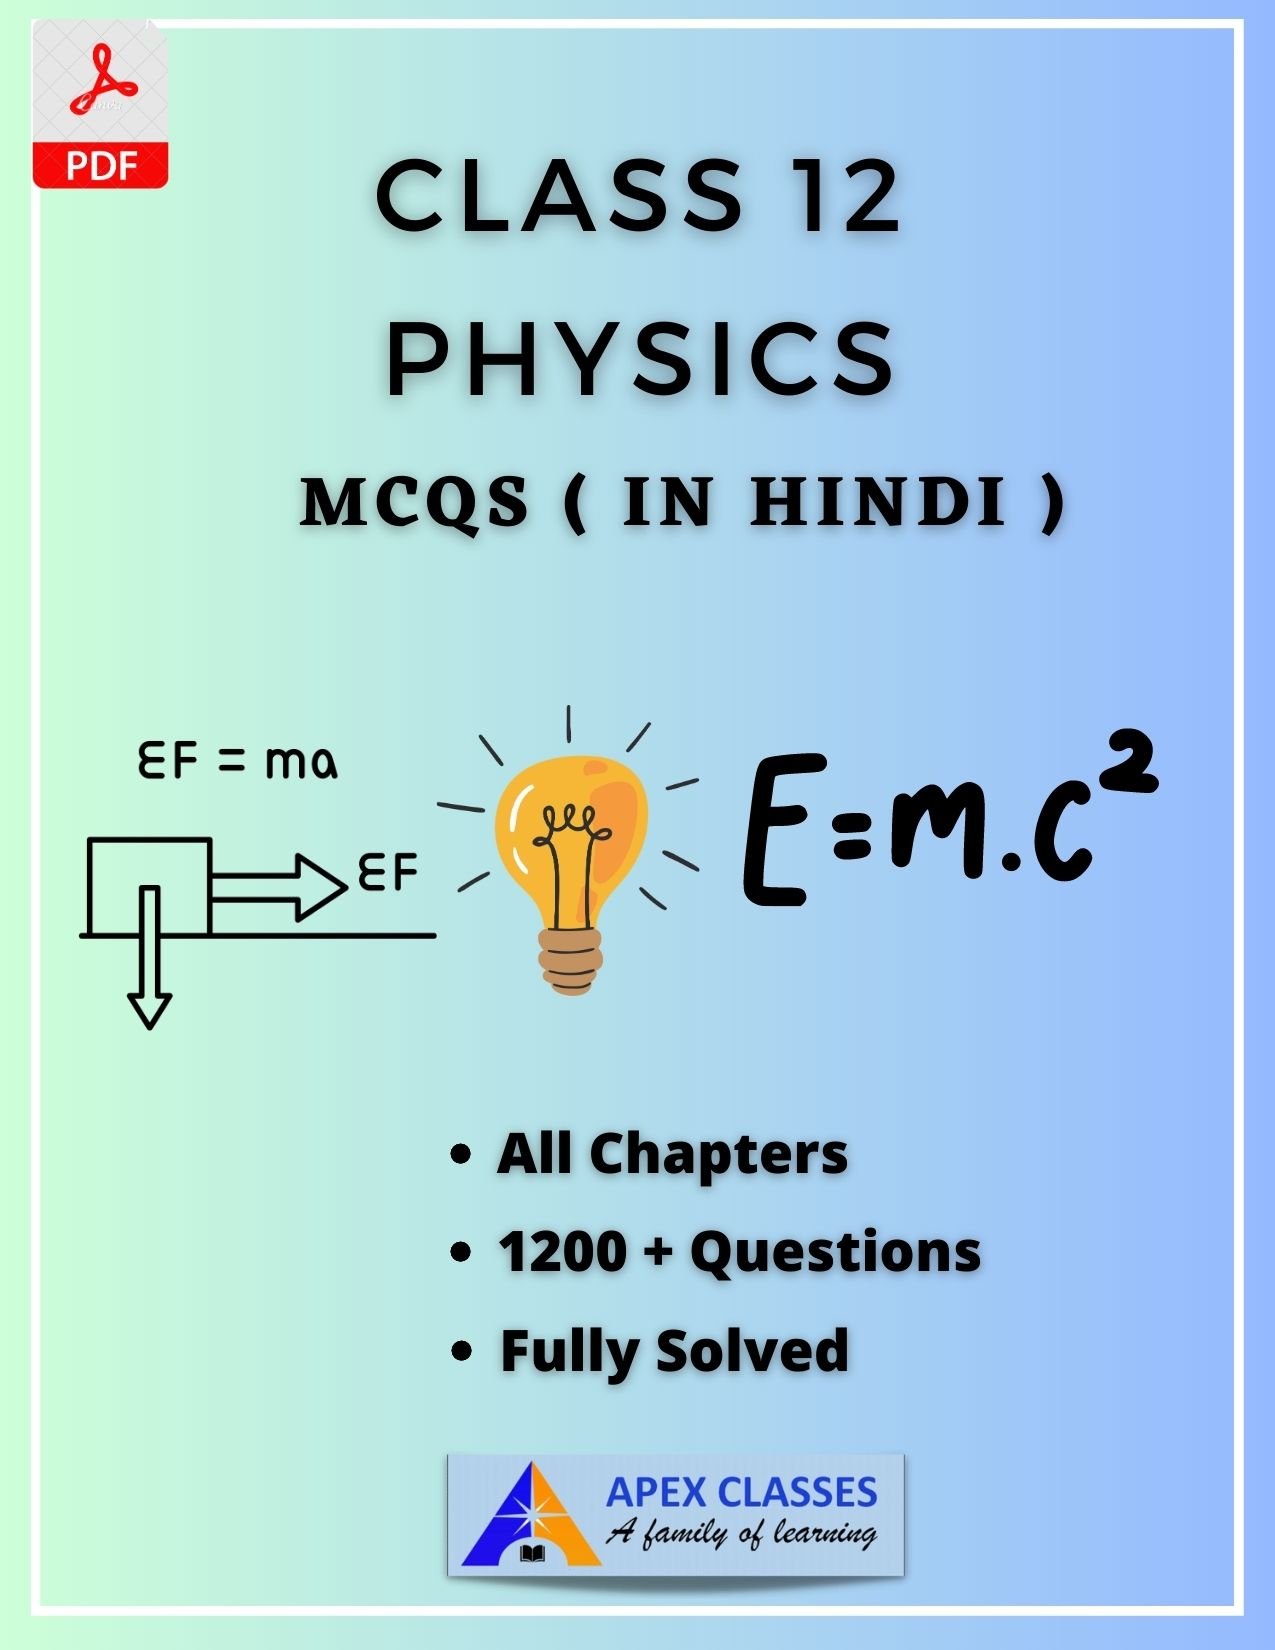 Class 12 Physics MCQs pdf in Hindi